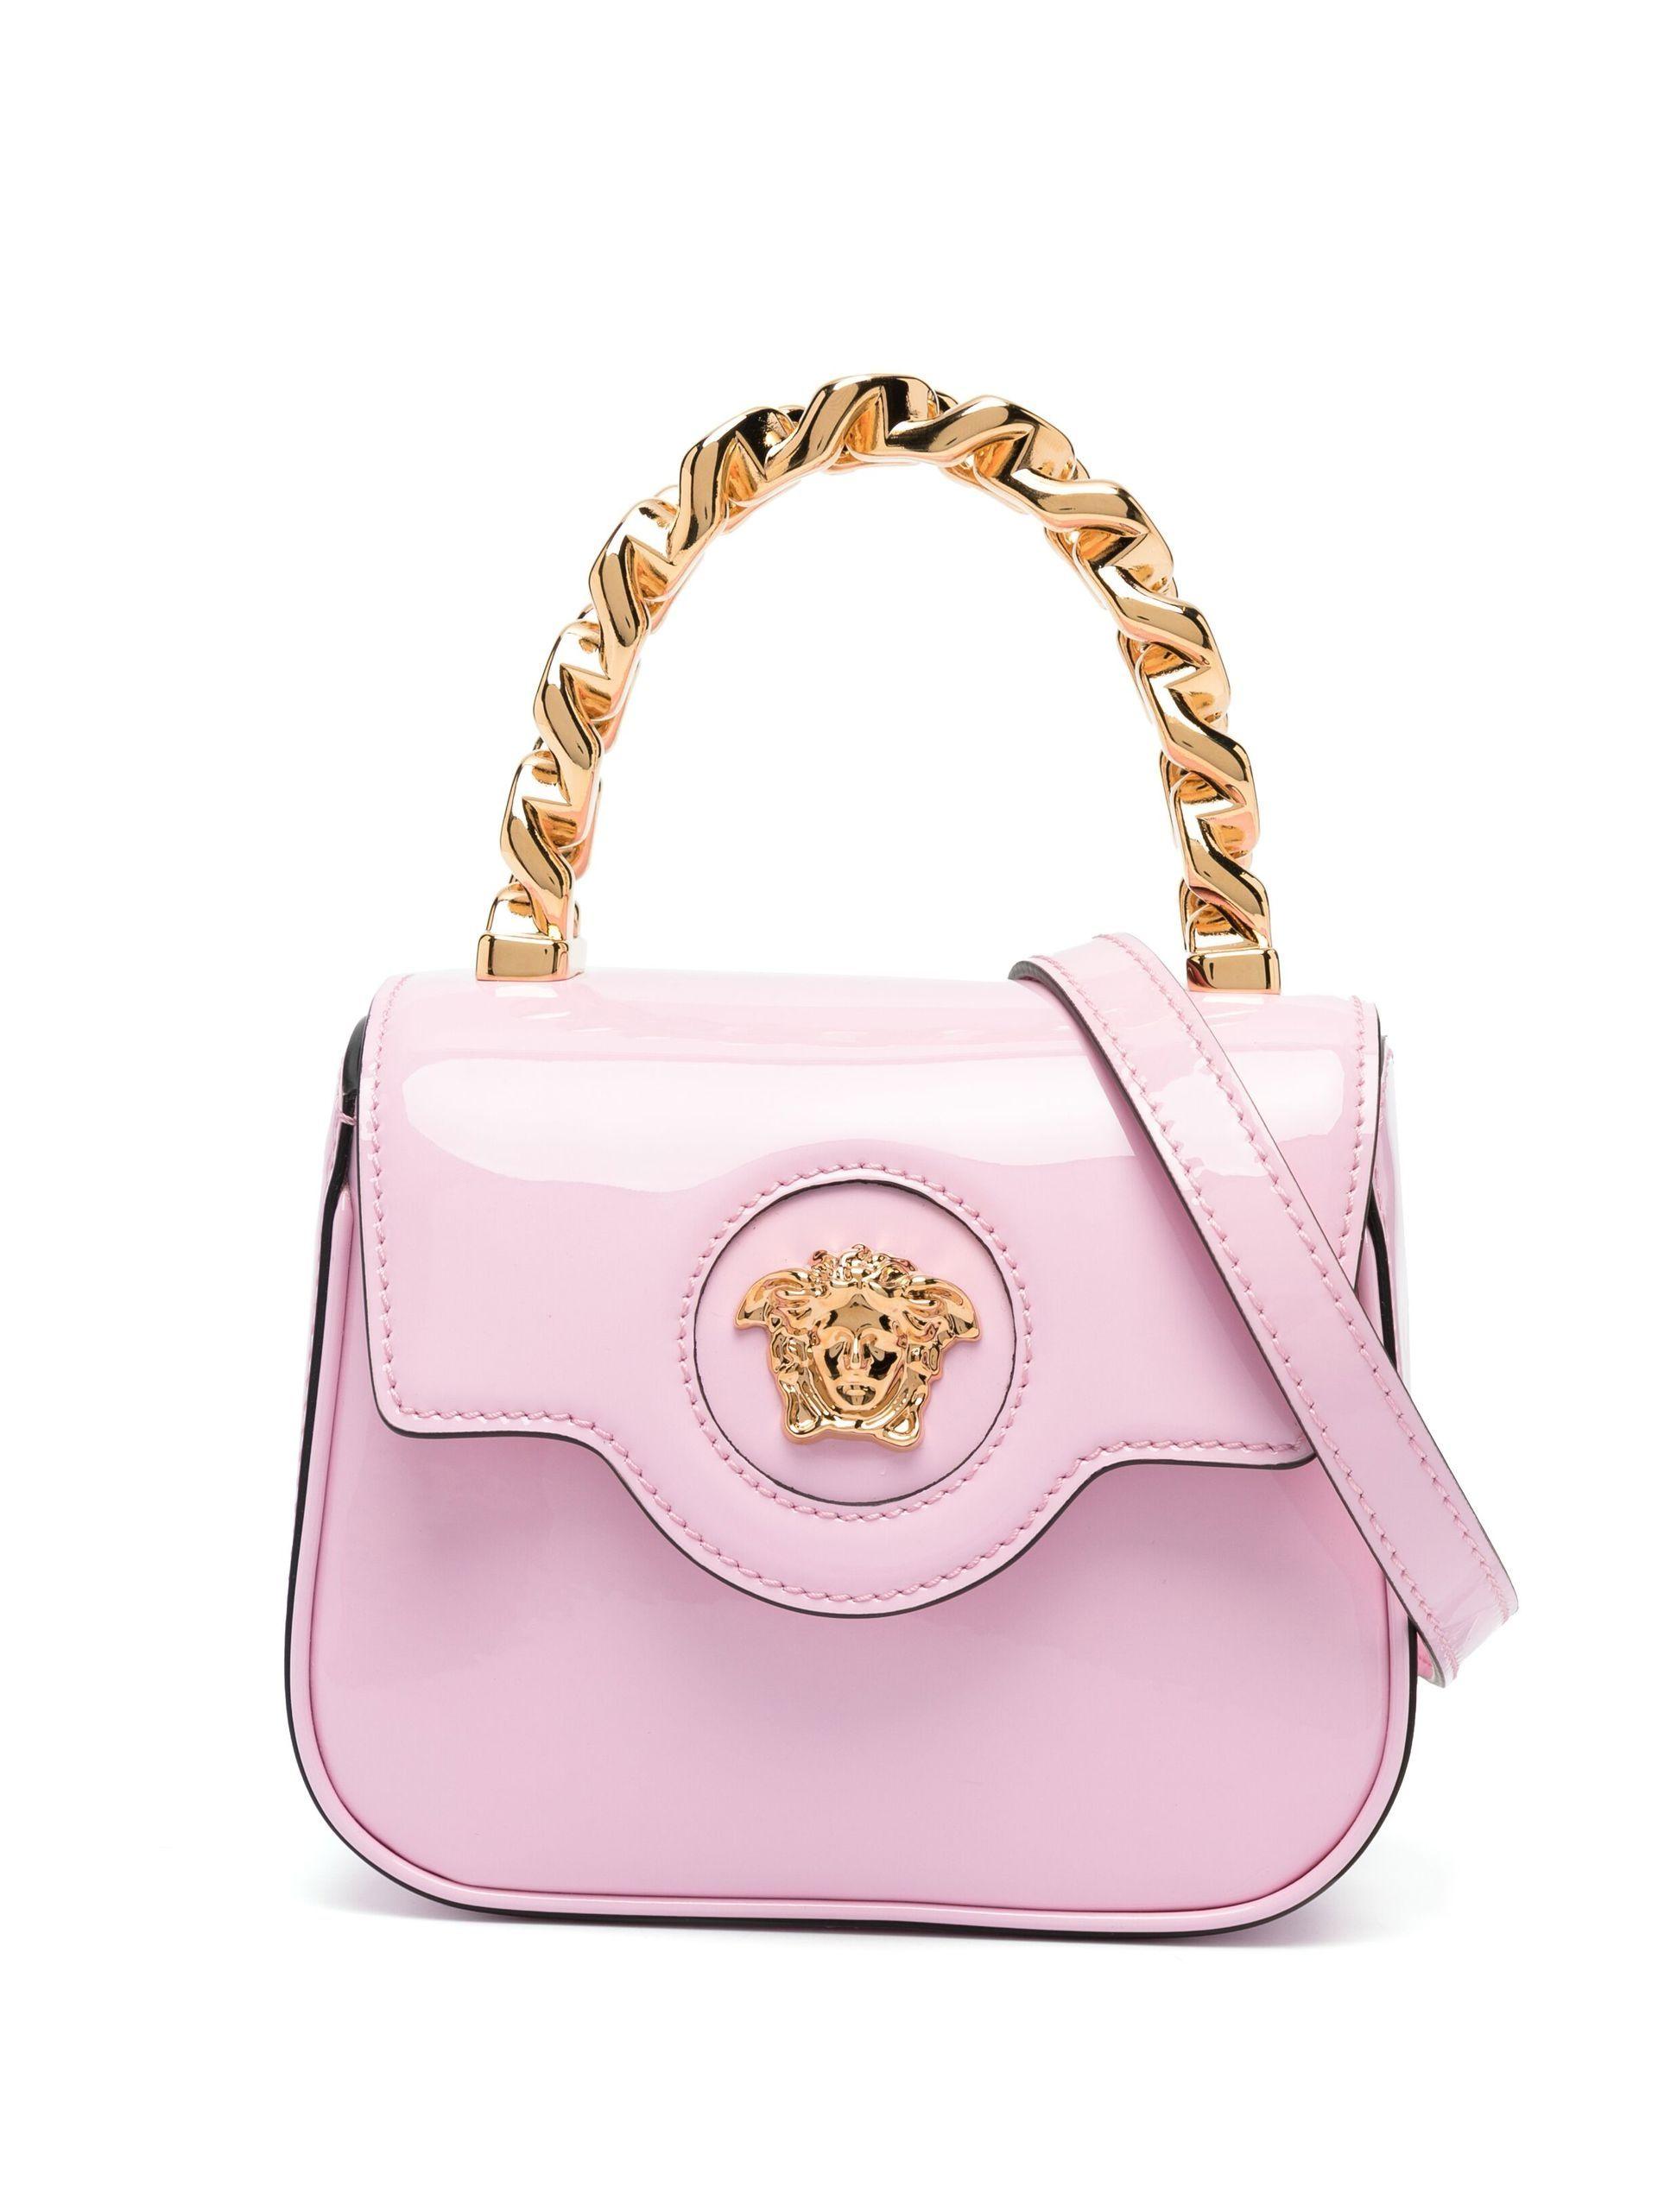 Versace Pink Medusa Head Patent Leather Mini Tote Bag | Lyst